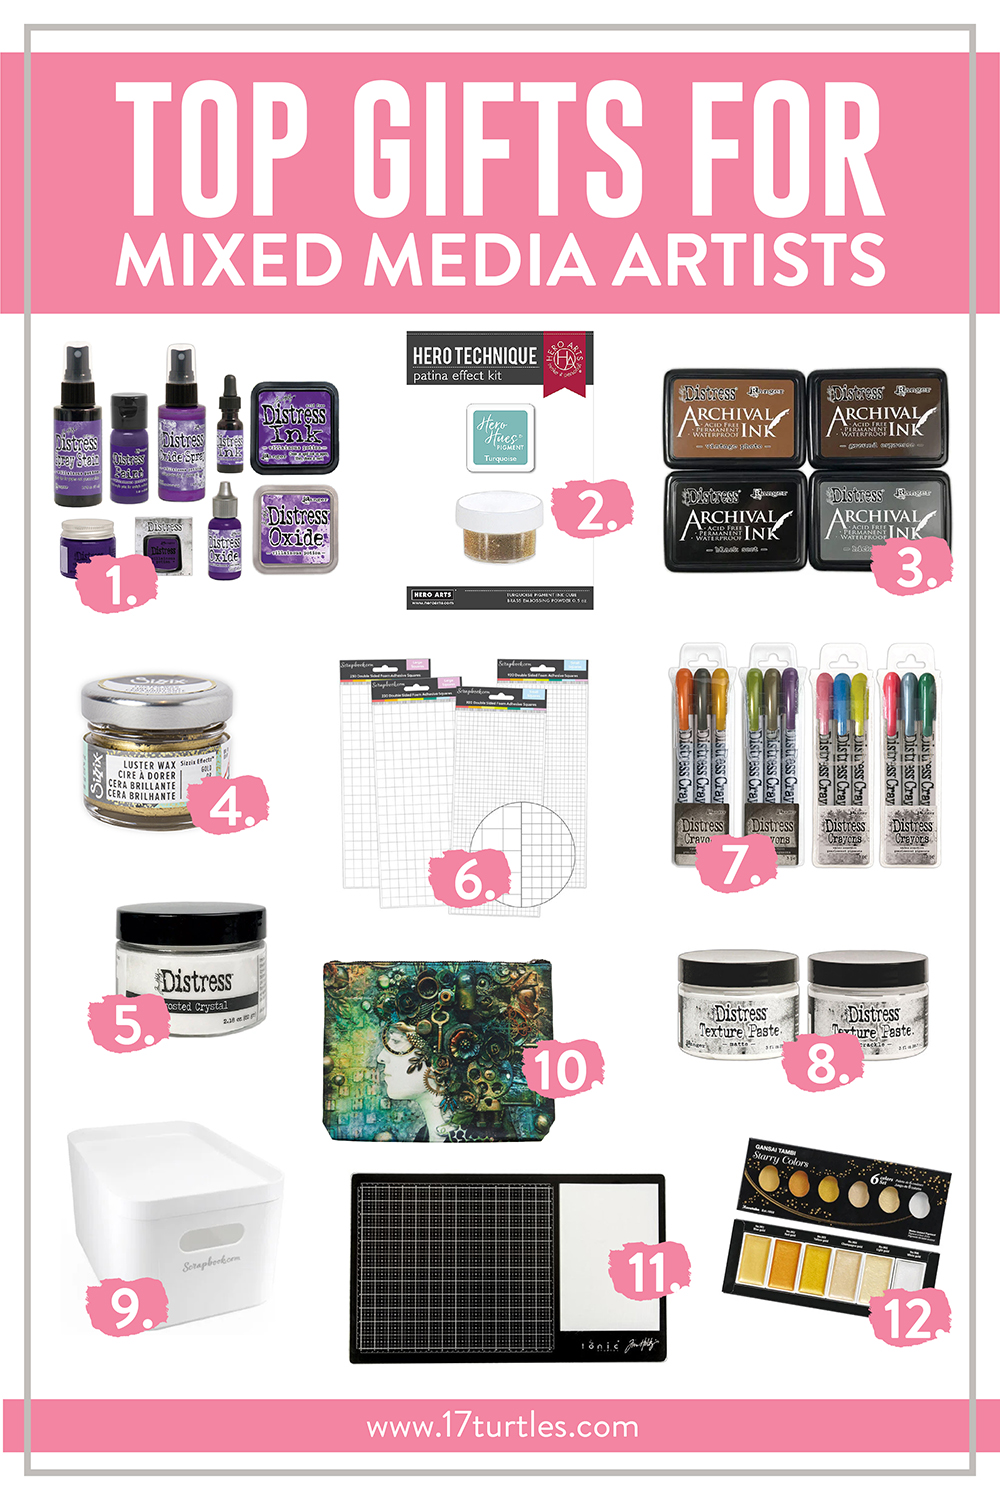 Top Gifts for Mixed Media Artists #topgiftsformixedmediaartists #mixedmedia #christmasgiftideas